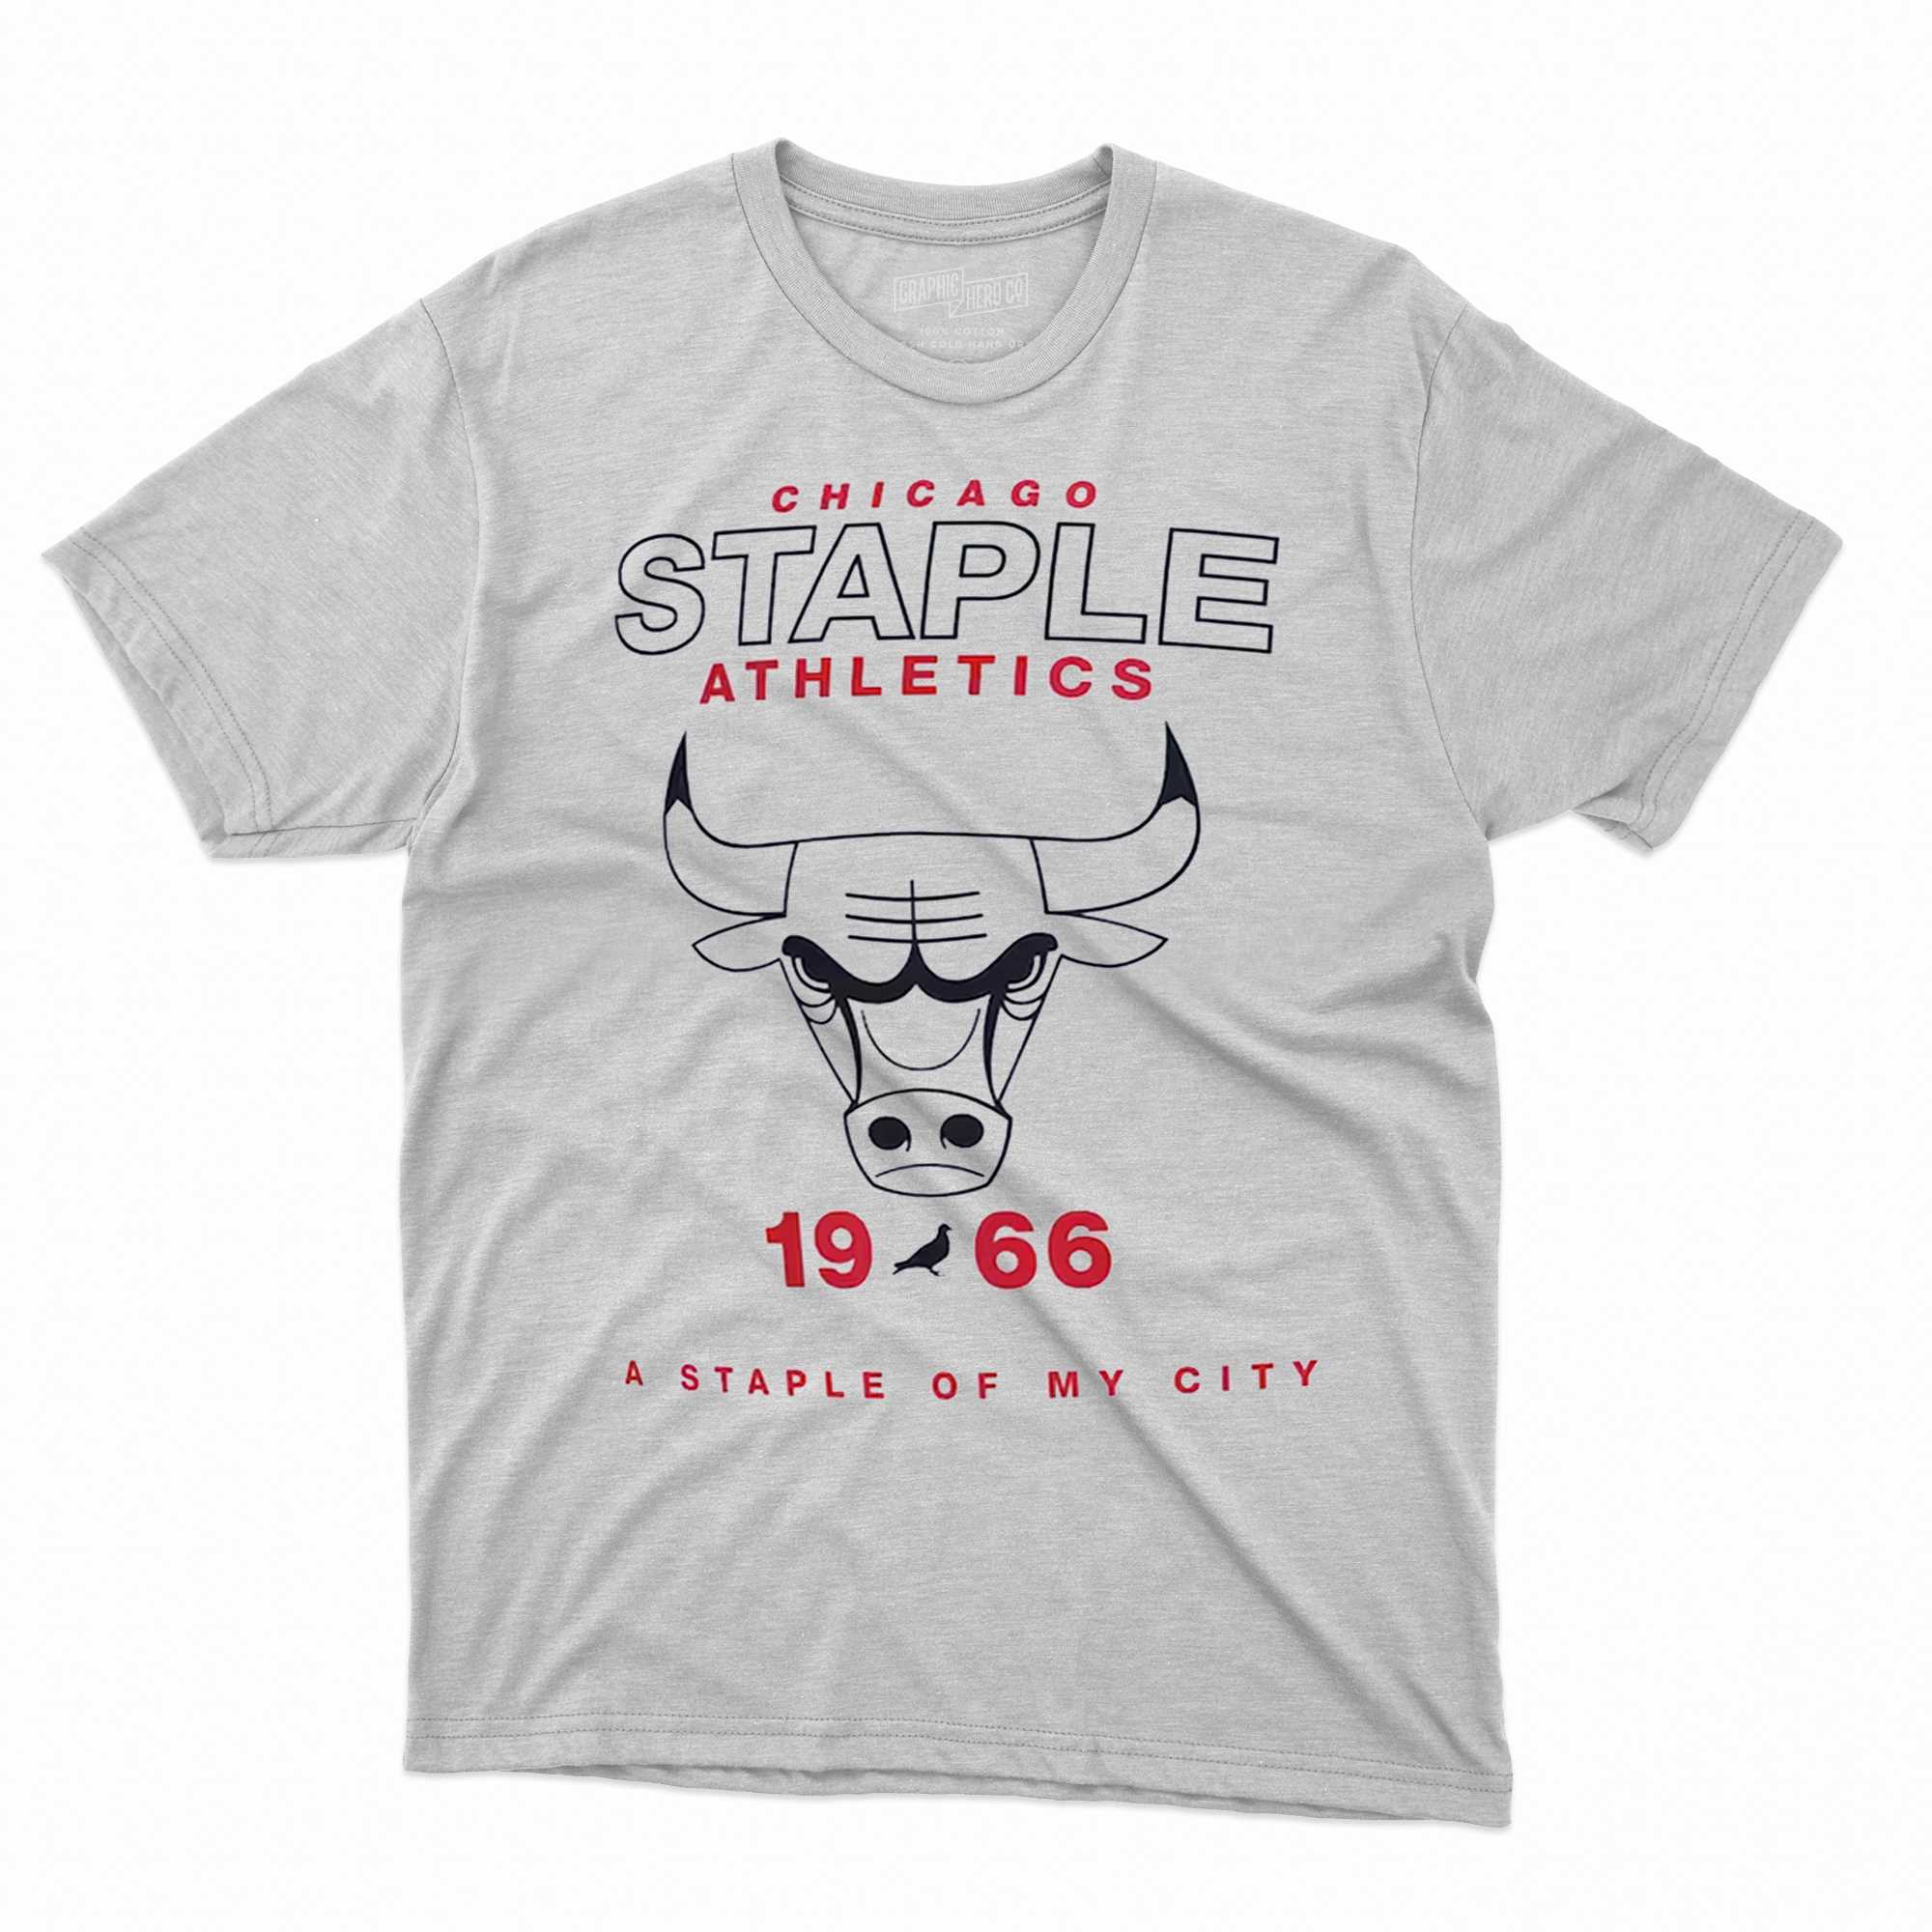 Chicago Bulls NBA Team Logo White T-Shirt